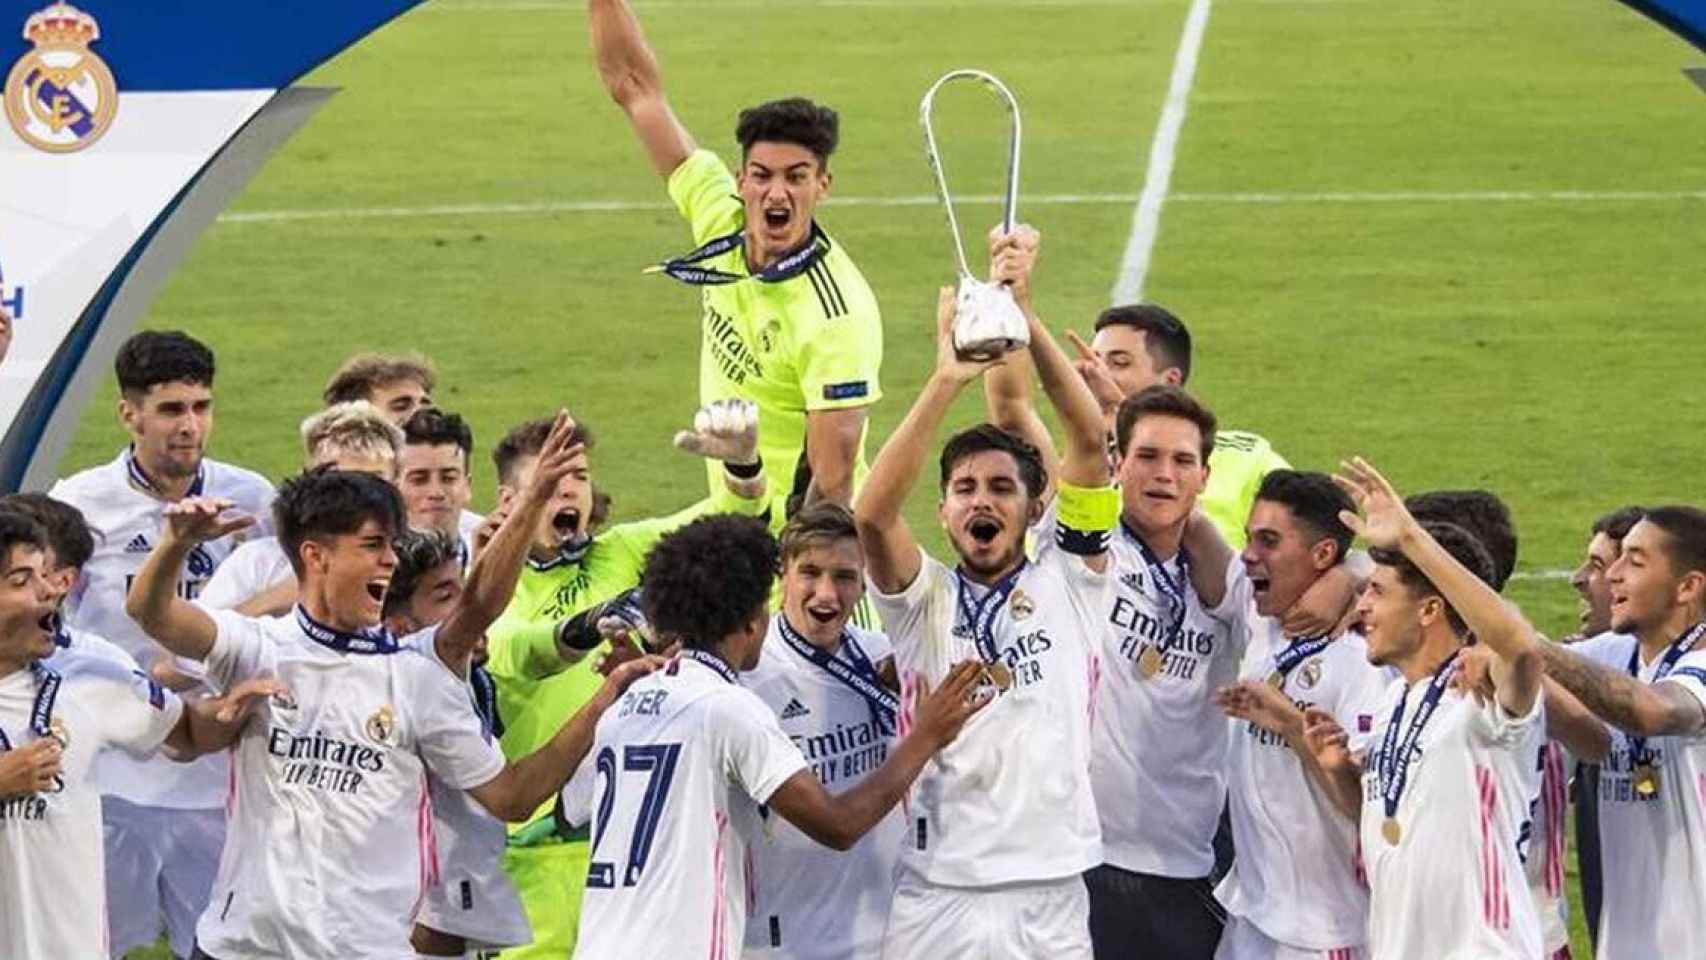 El talento del Real Madrid Castilla al que protege Florentino Pérez / EFE